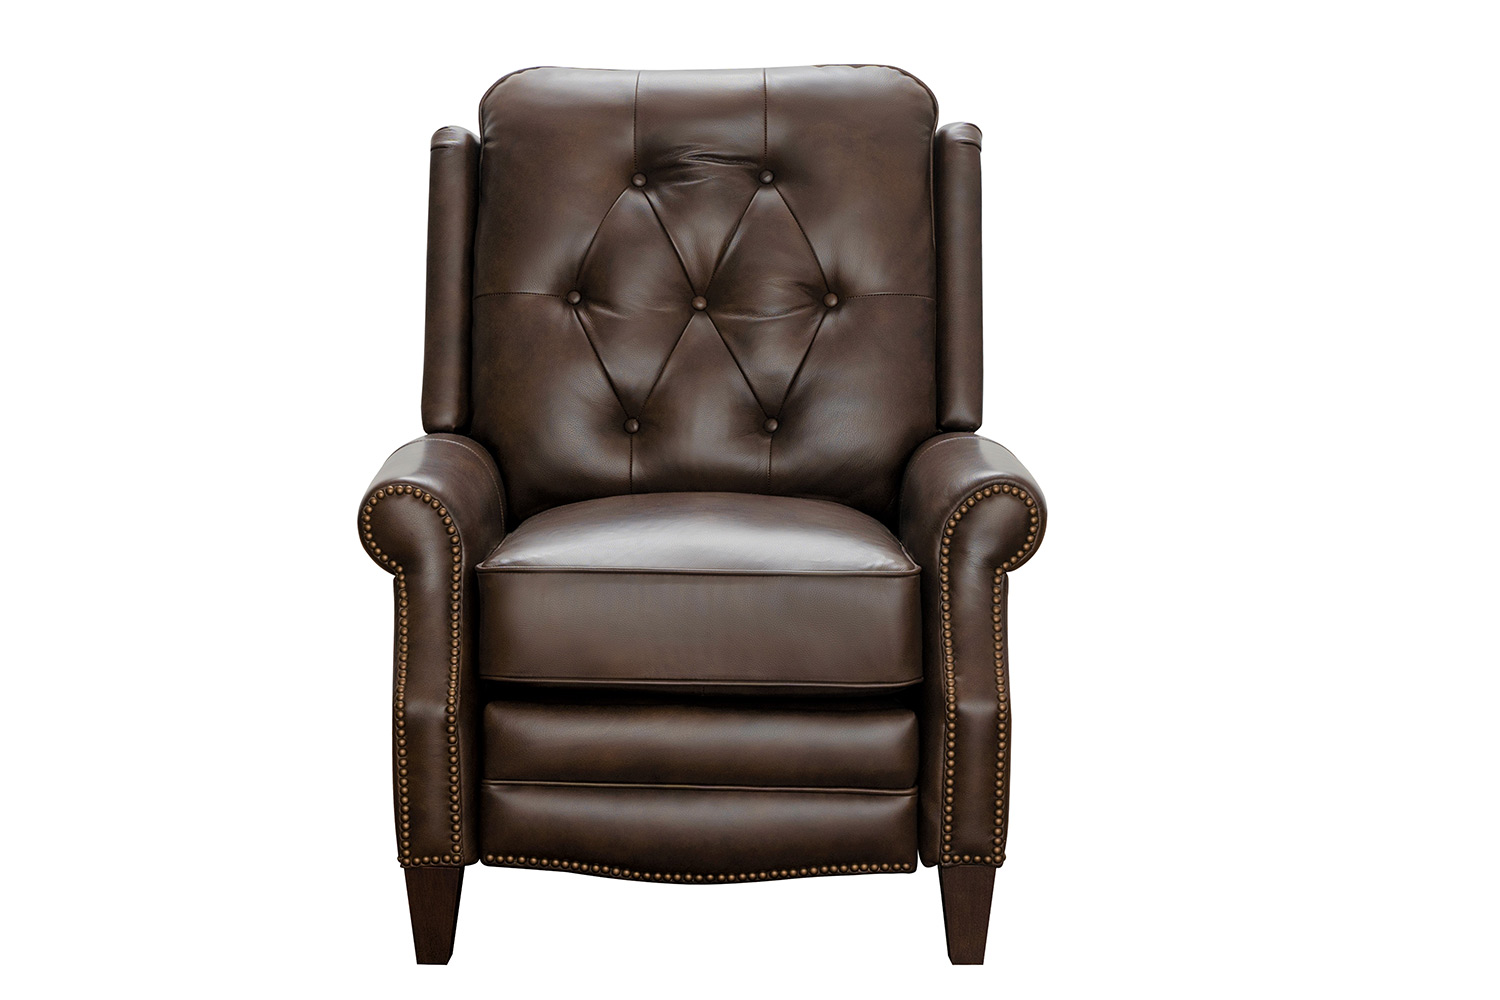 Barcalounger Ava Power Recliner Chair - Ashford Walnut/All Leather